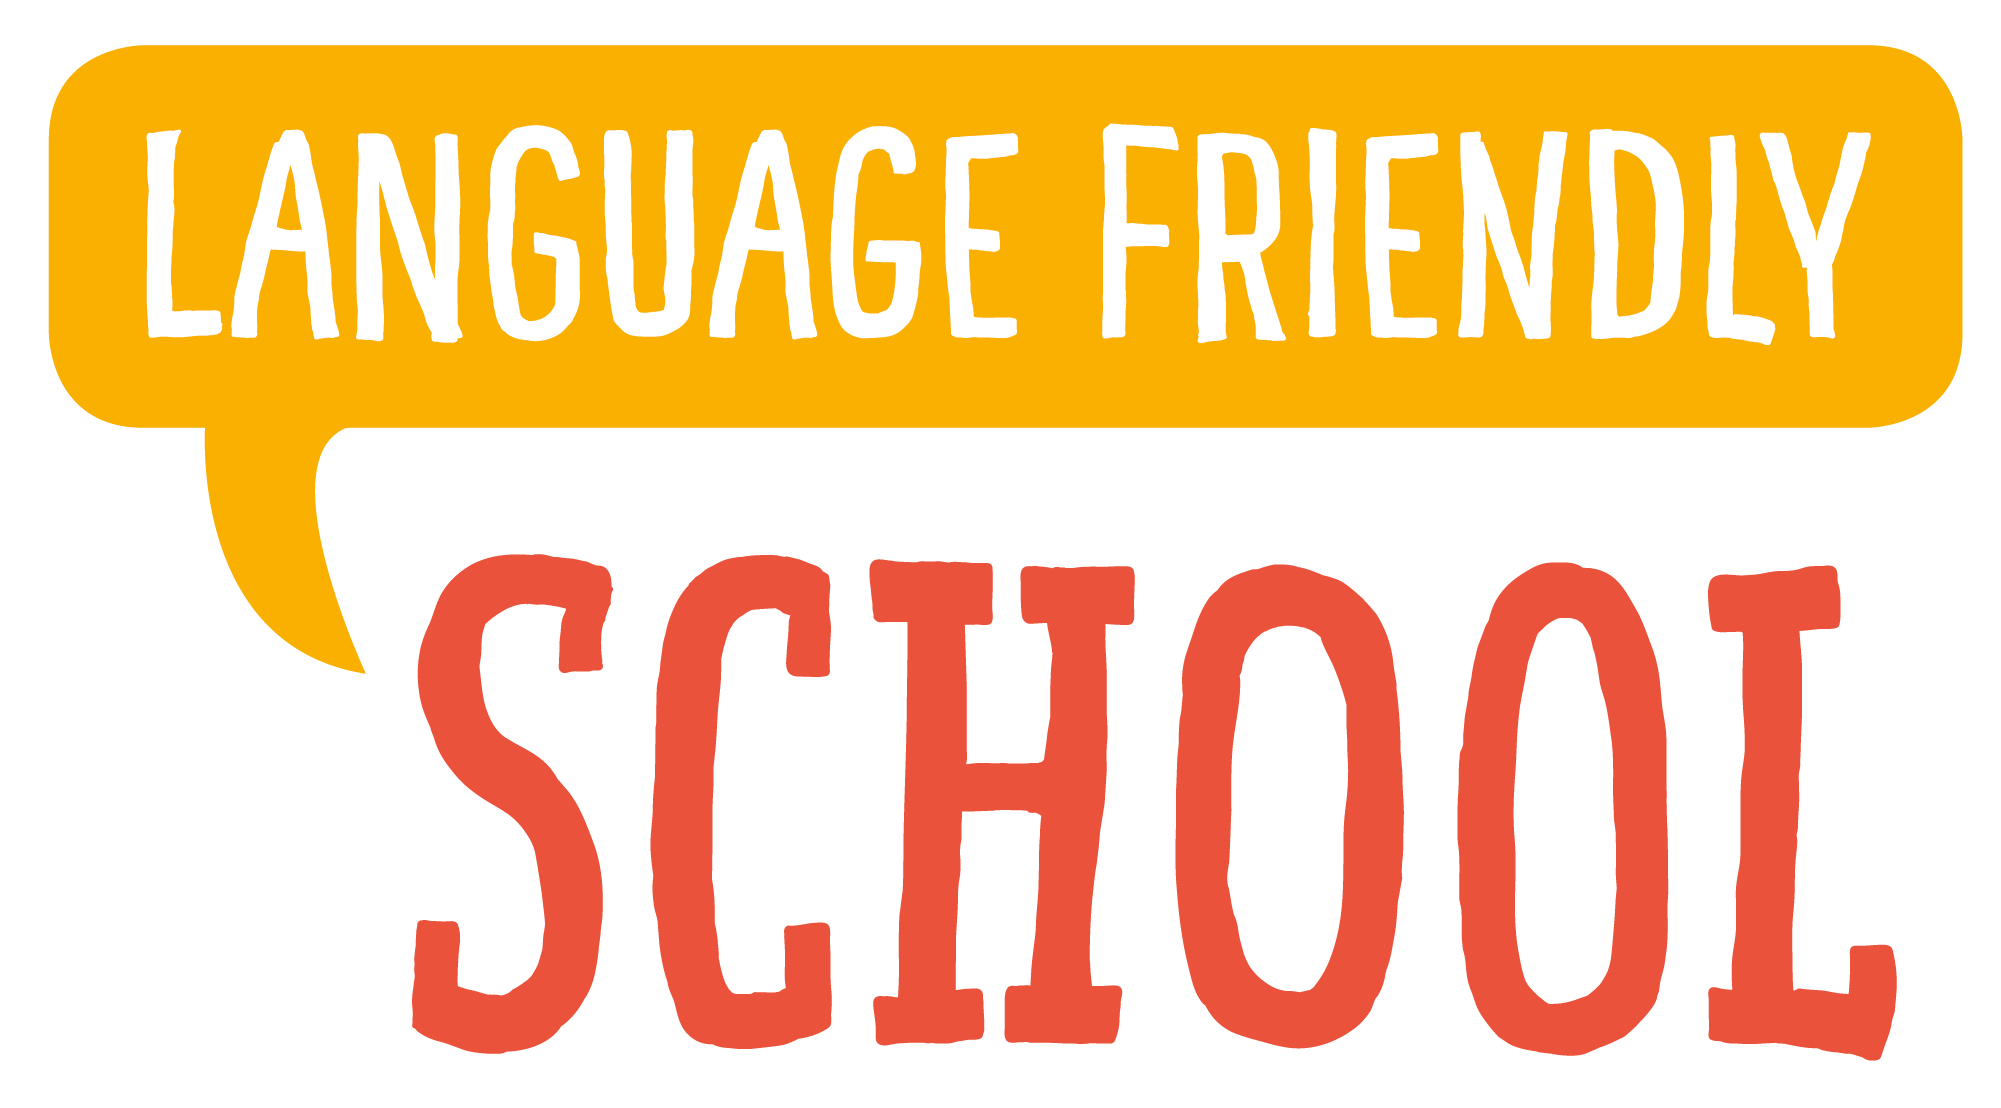 News - Language Friendly School